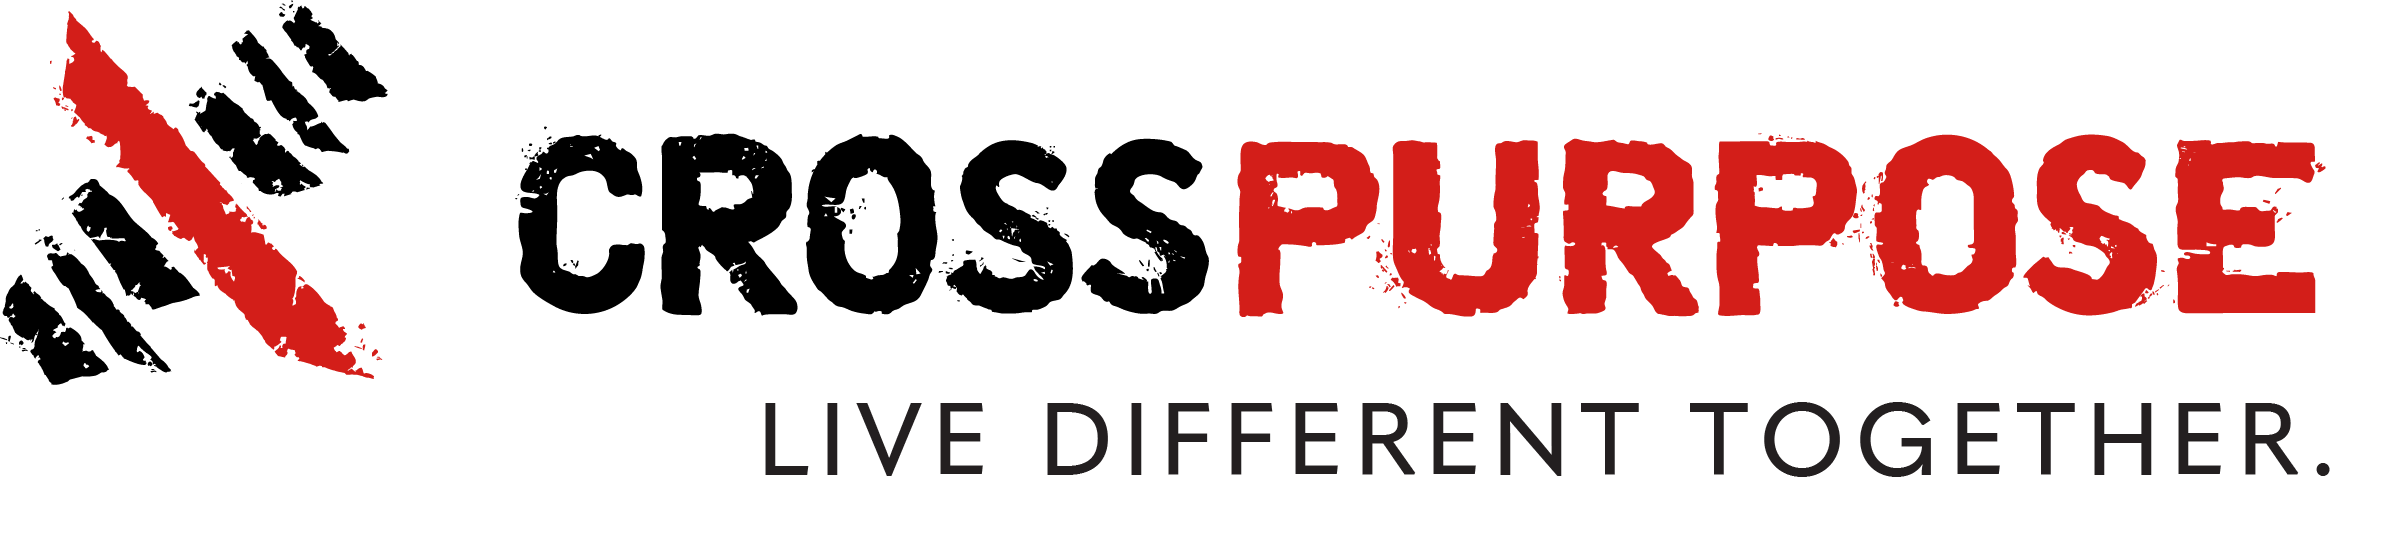 CrossPurpose Live Different Together Logo - Black_Red.png